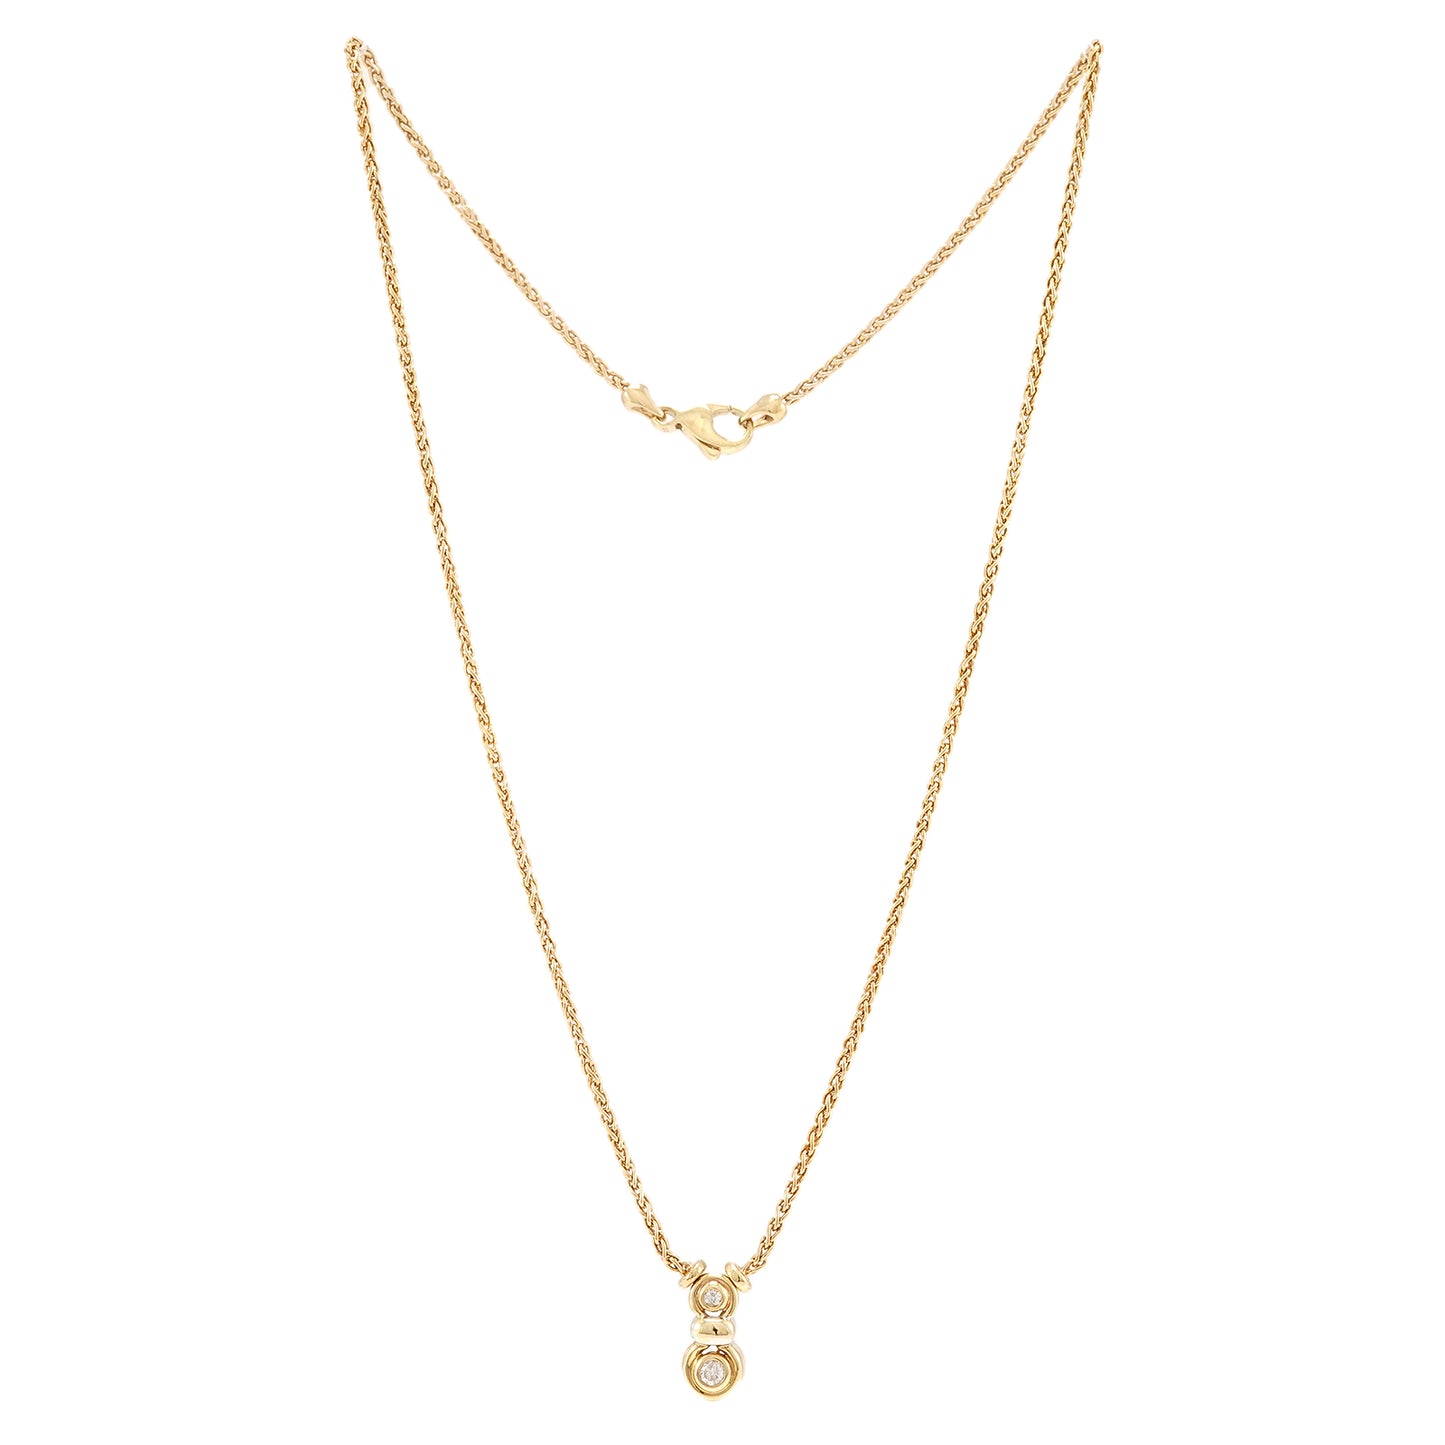 Vintage diamond necklace yellow gold 14K women's jewelry gold chain diamond necklace